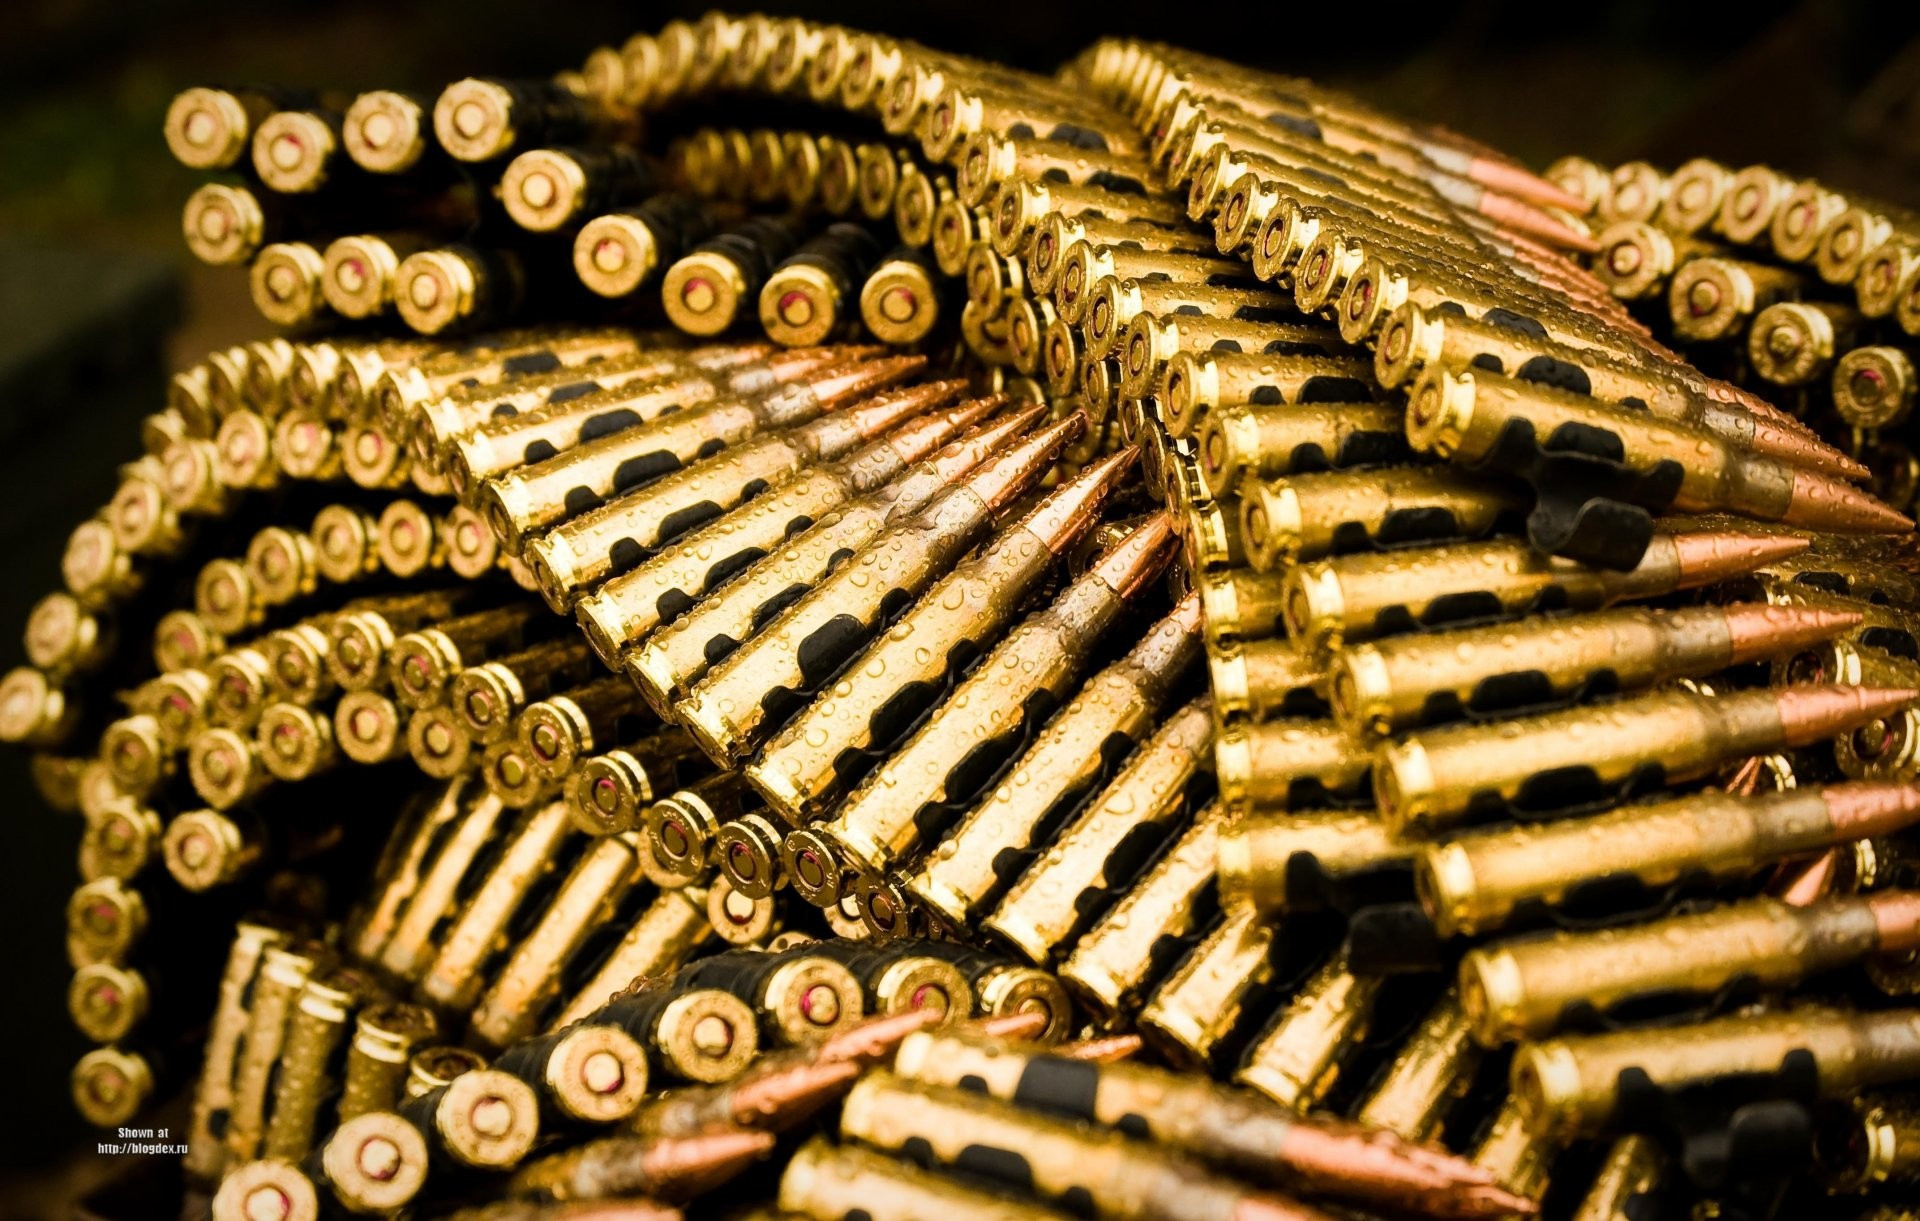 Бесплатное фото Пулеметная лента с патронами